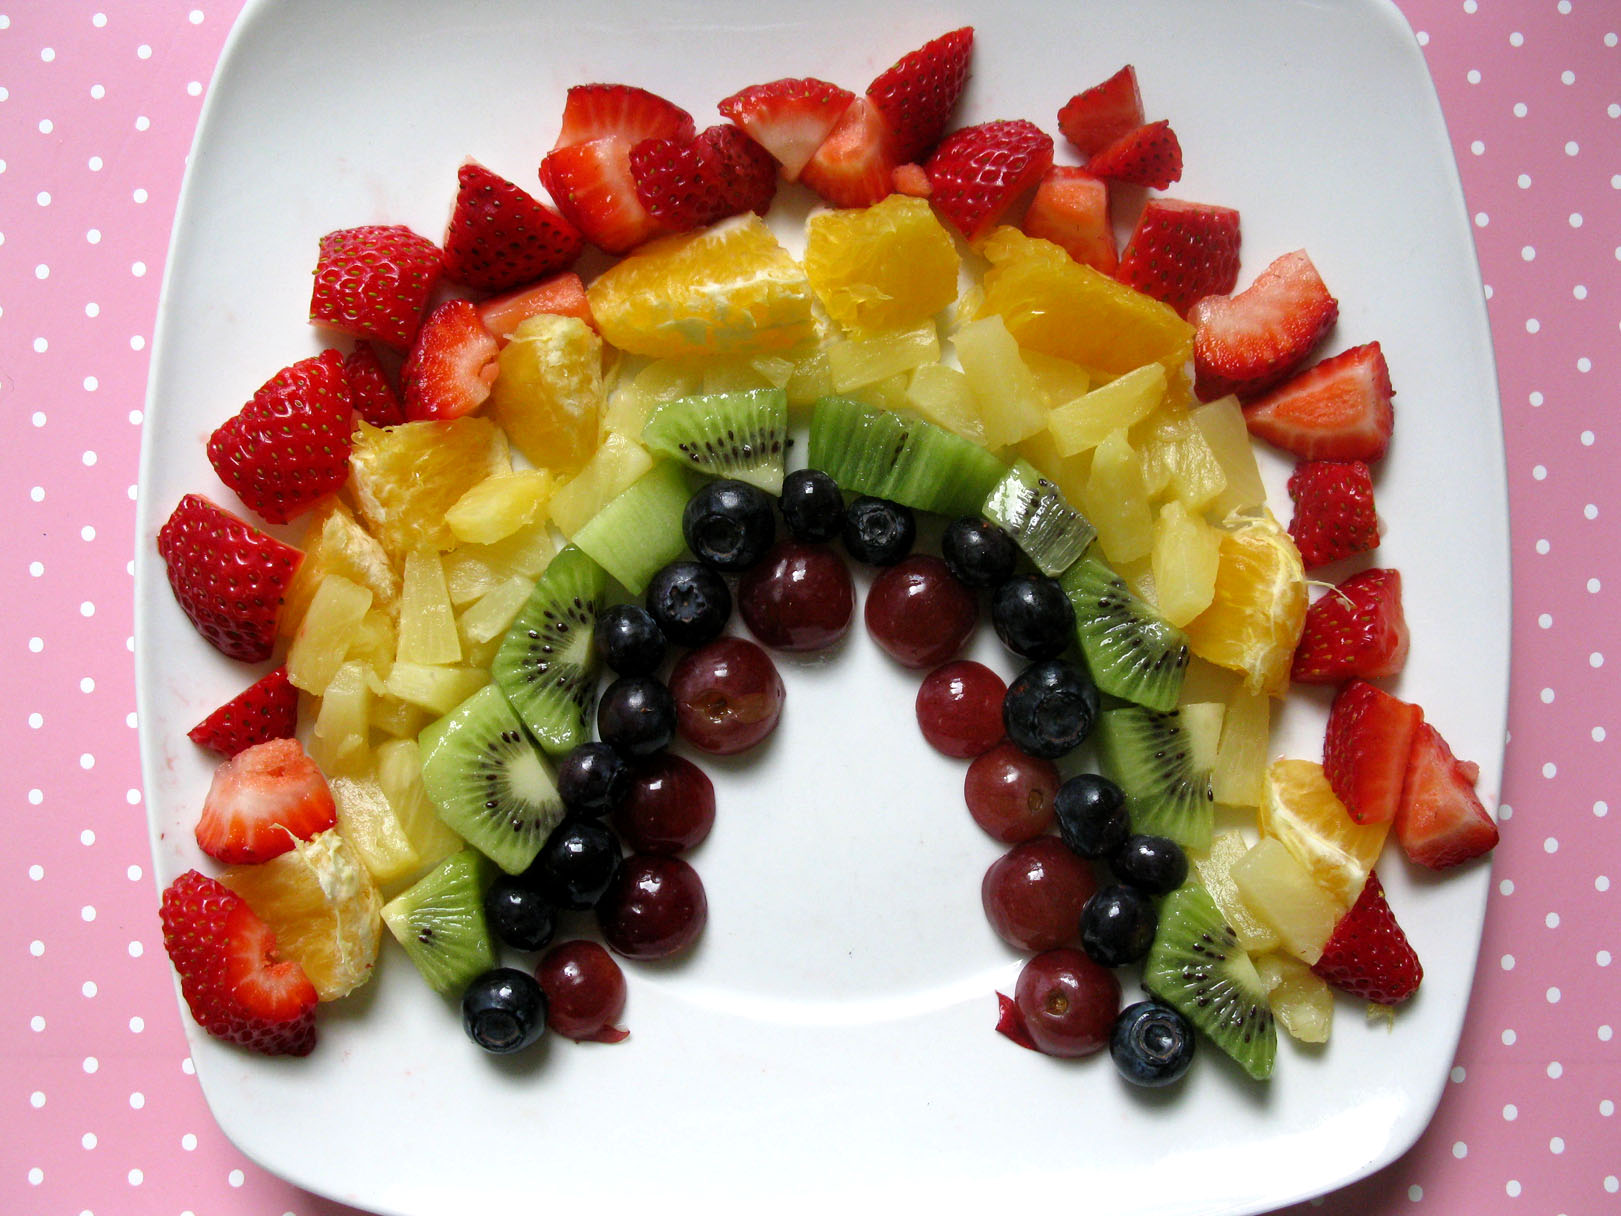 Rainbow Fruit Platter